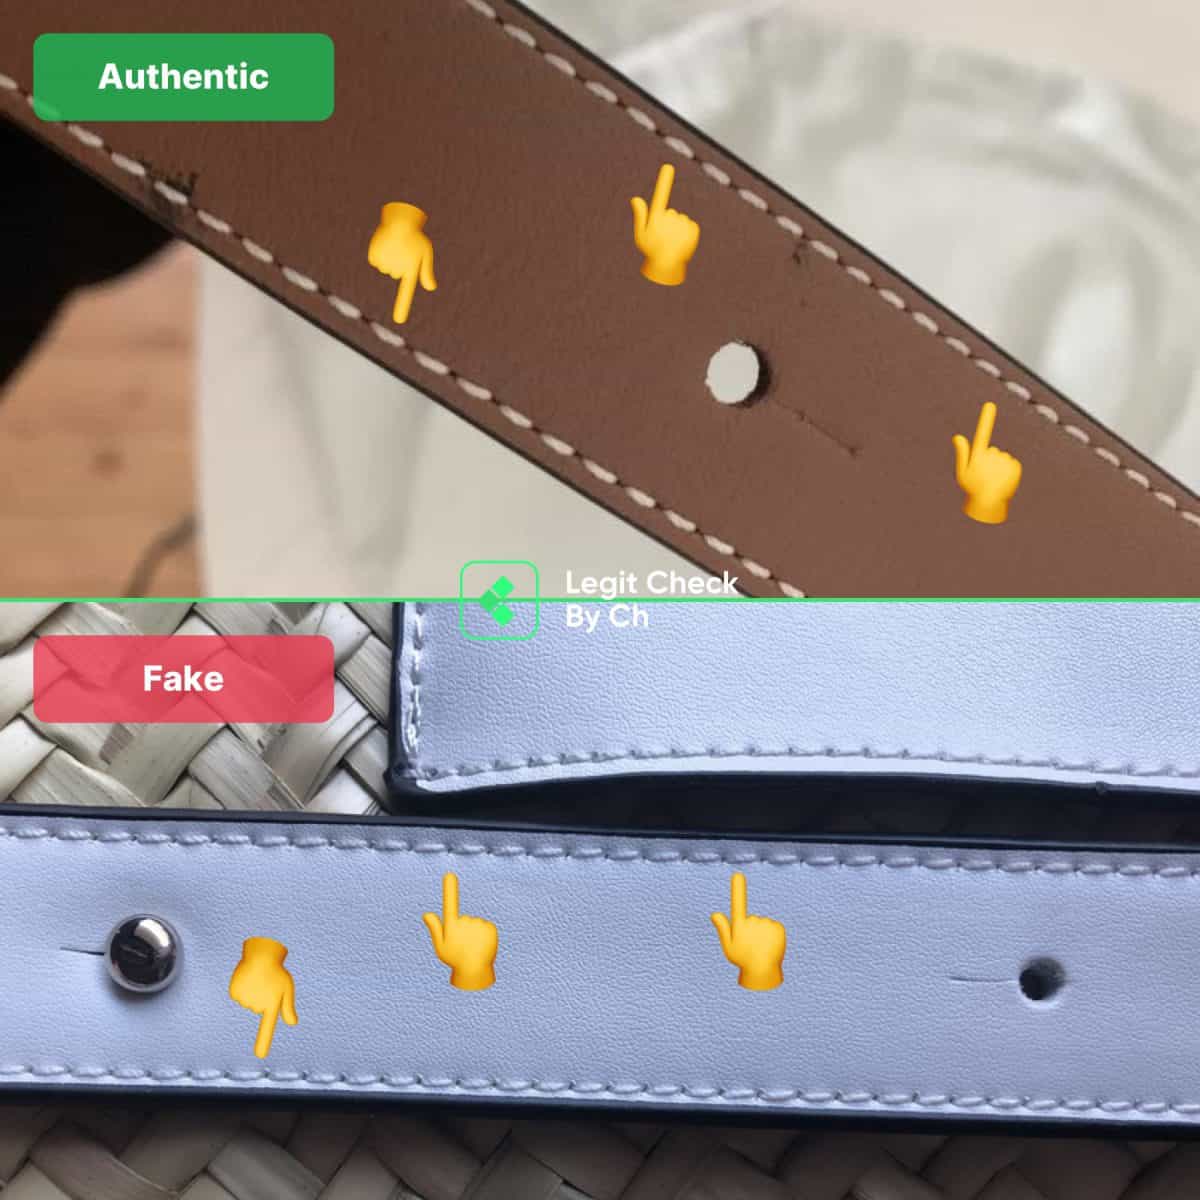 Authentic vs Fake Loewe Basket bag comparison: the belt